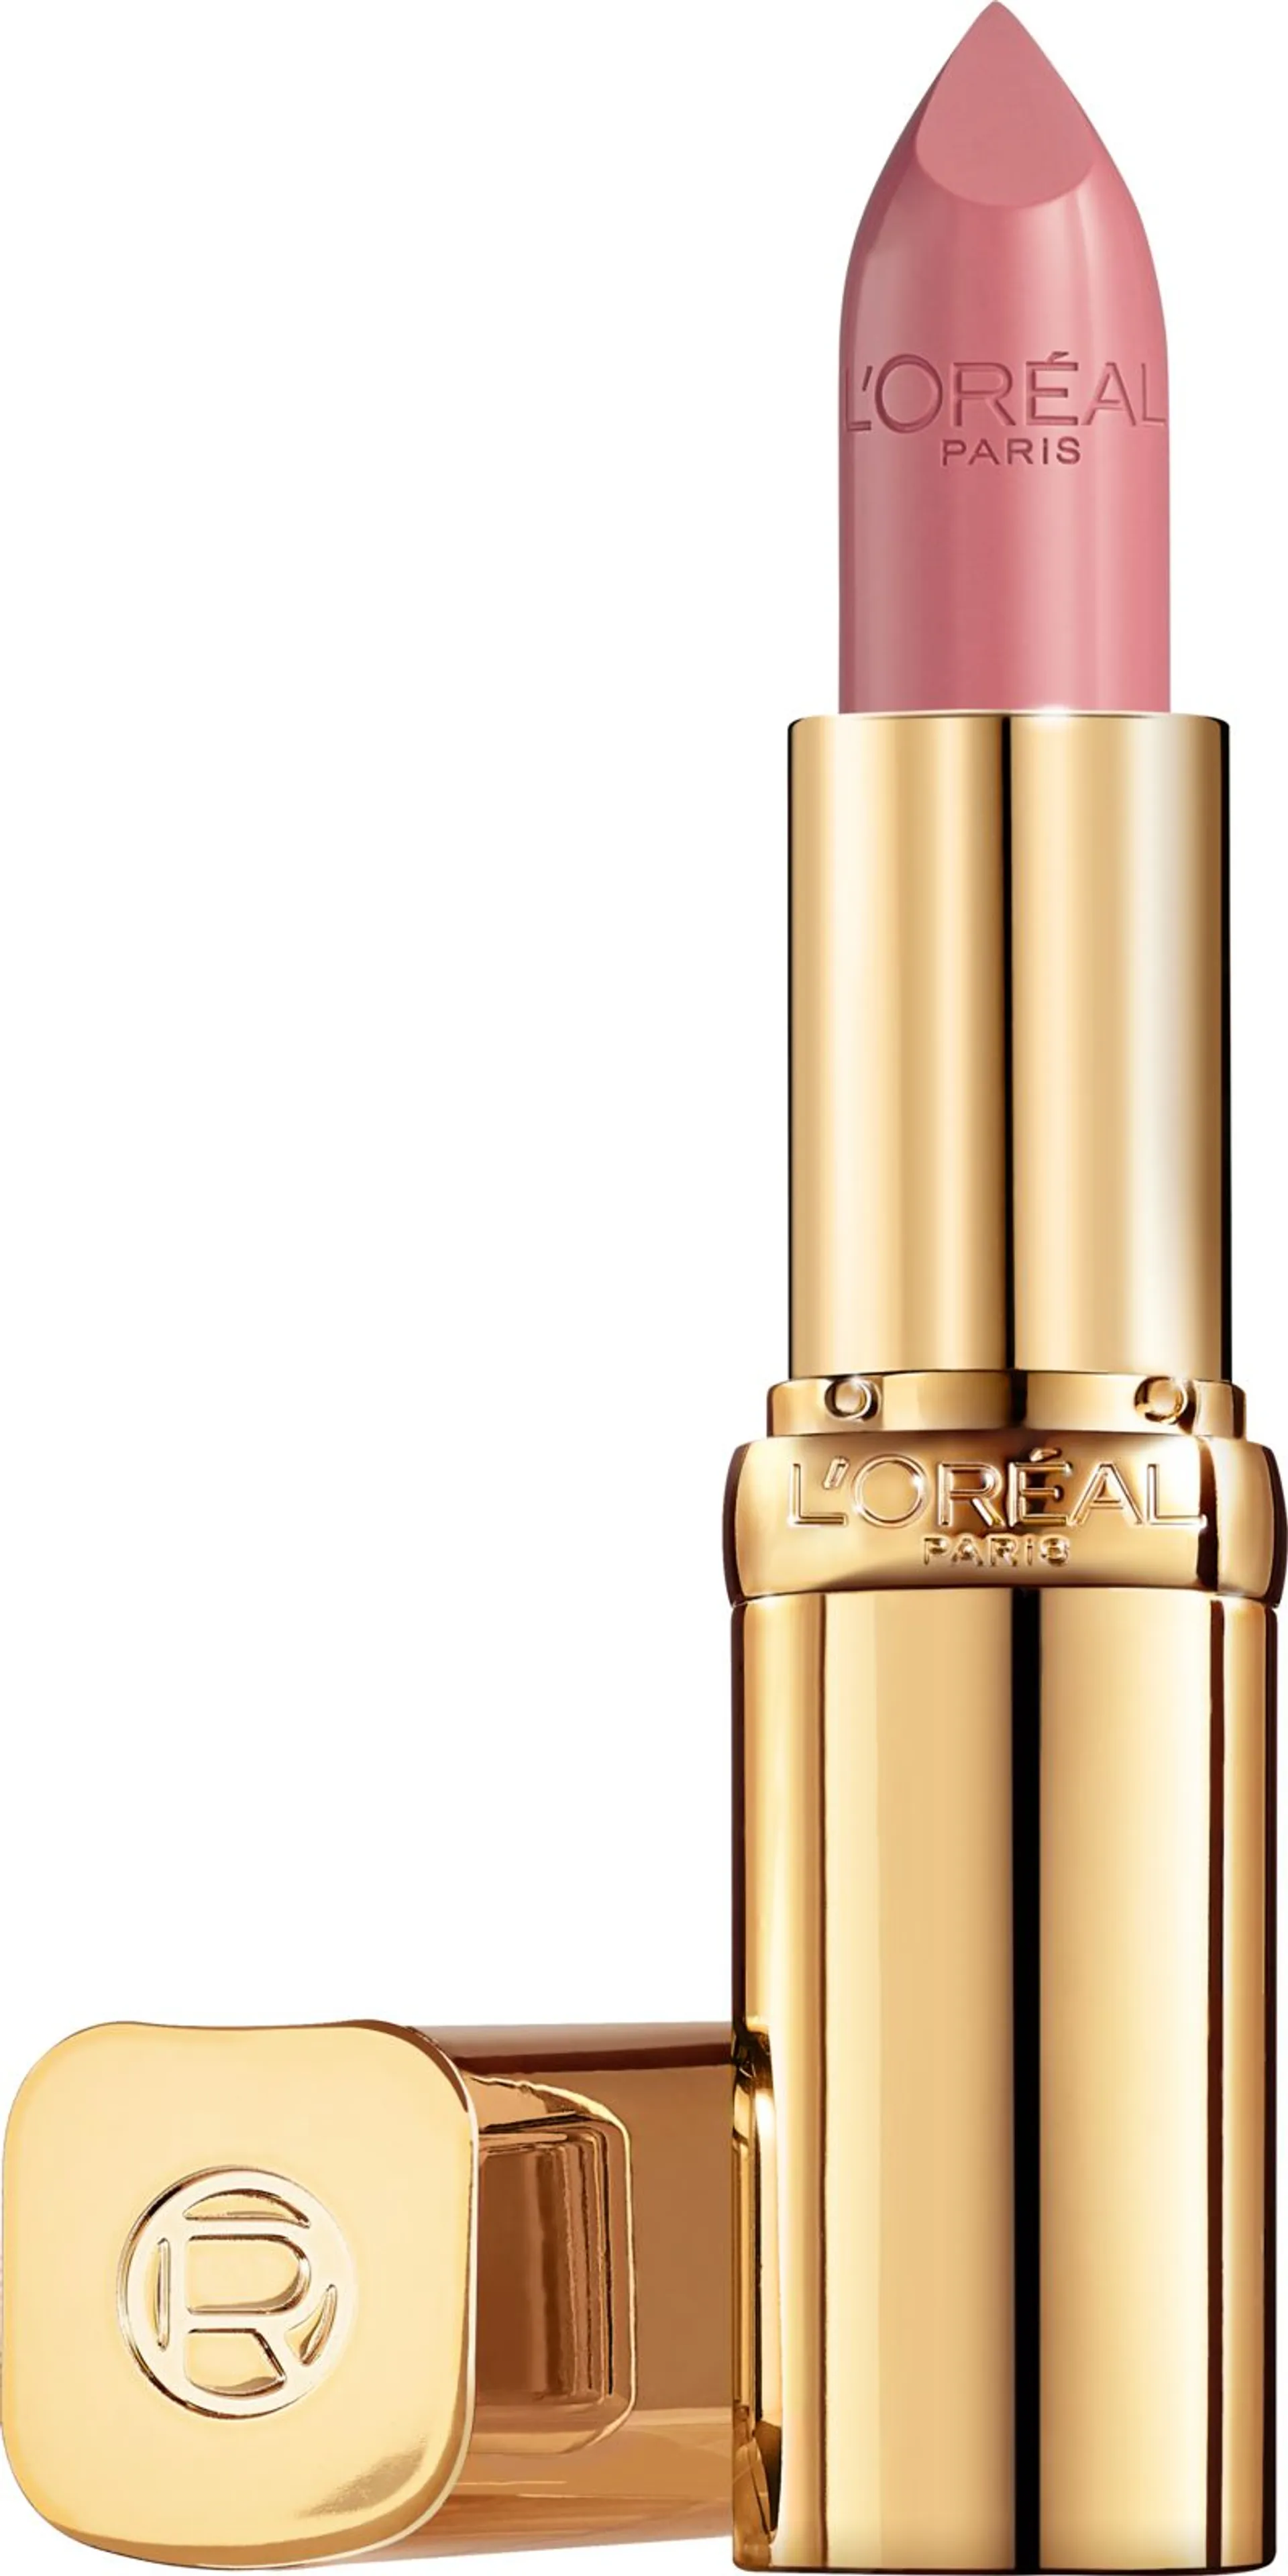 L'Oréal Paris Color Riche Satin 235 Nude huulipuna 4,8 g - 1